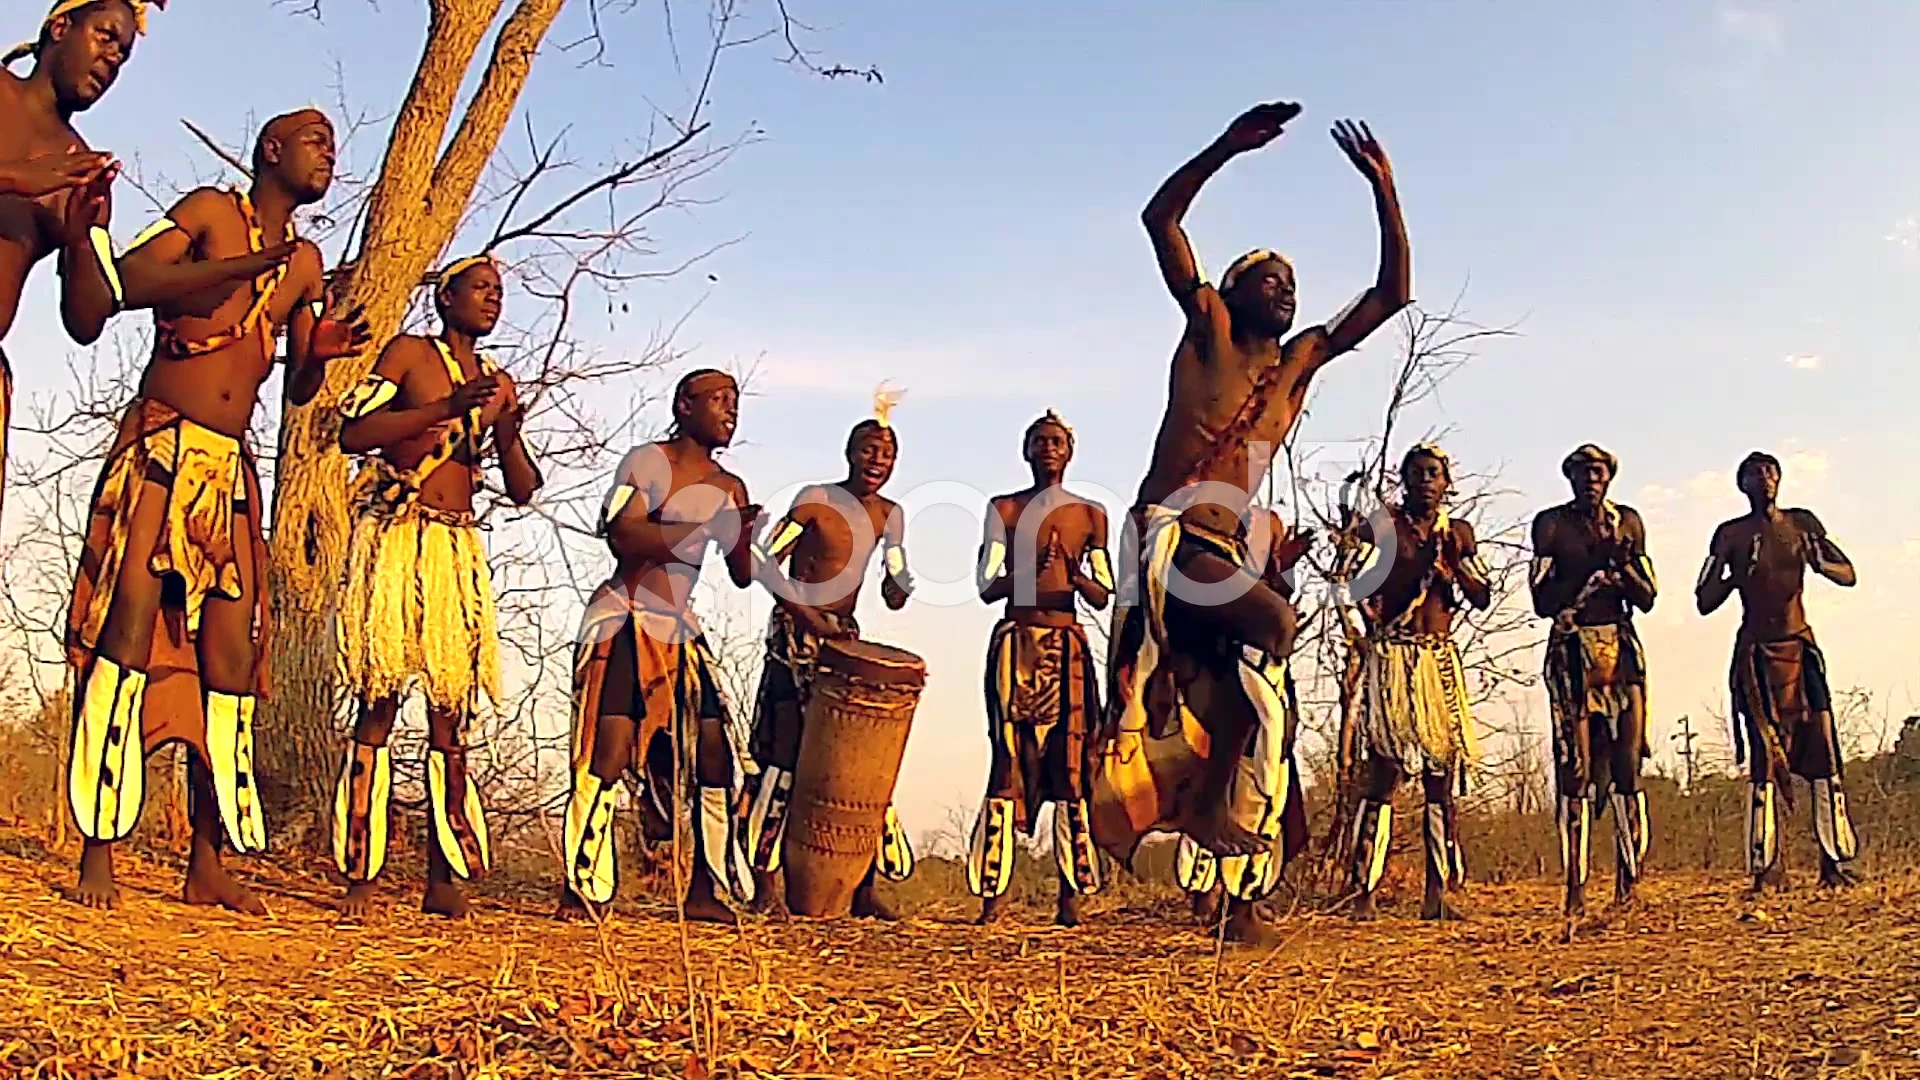 african-tribal-song-and-dance-043995518_prevstill.jpeg